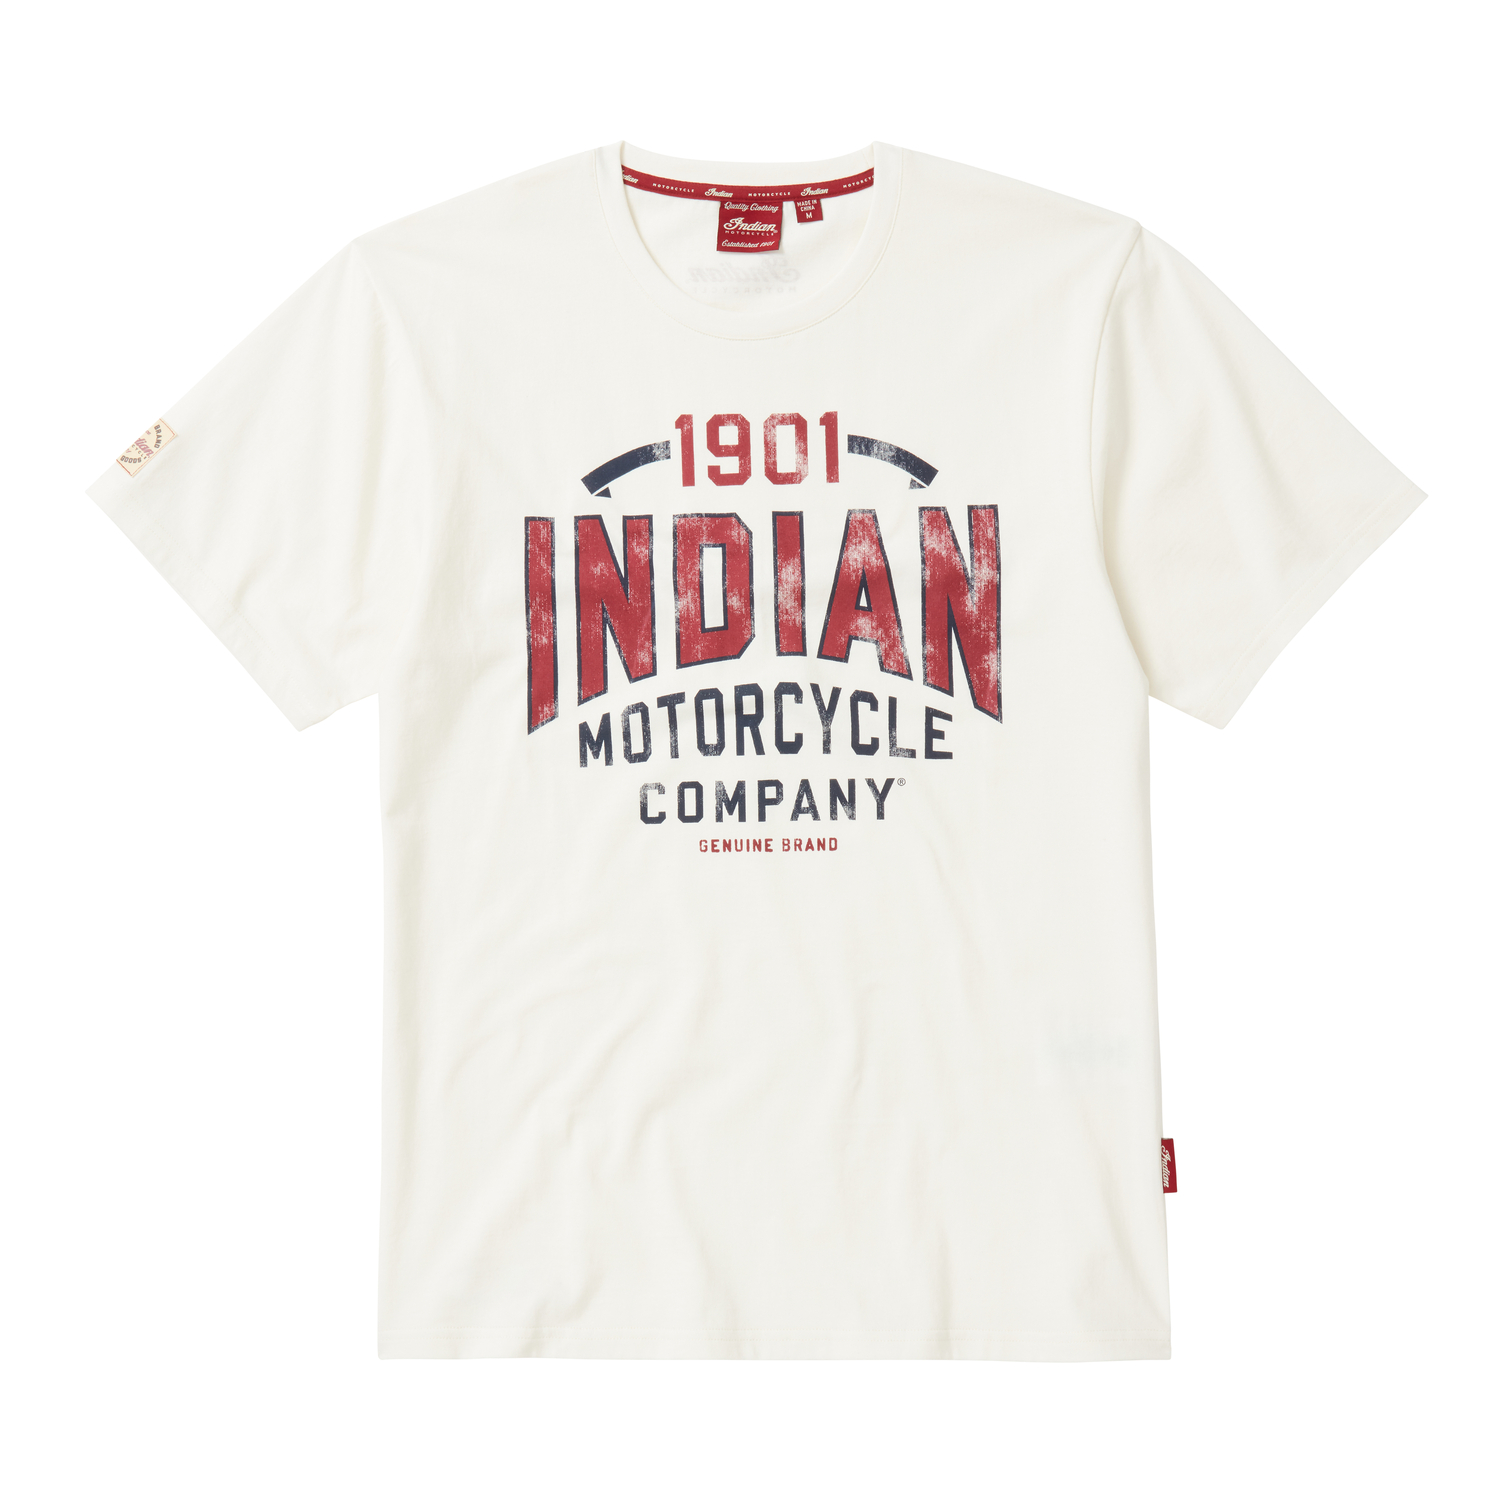 M L XL 2X Brand New Genuine Indian Motorcycles Black ECRU T-shirt